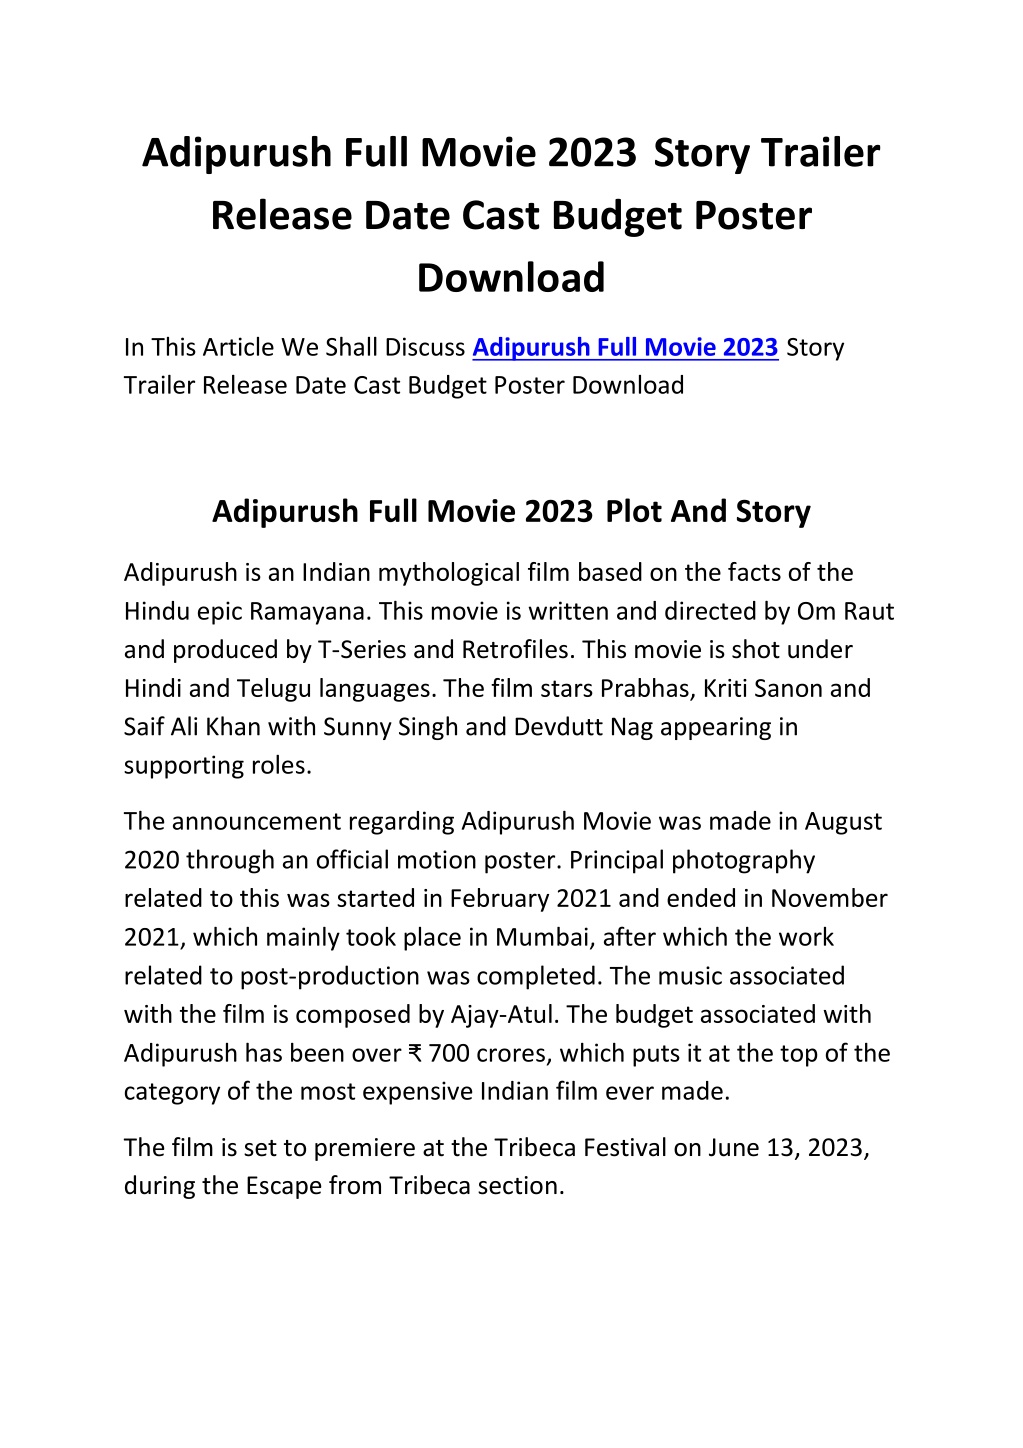 PPT Adipurush Full Movie 2023 Story Trailer Release Date Cast Budget